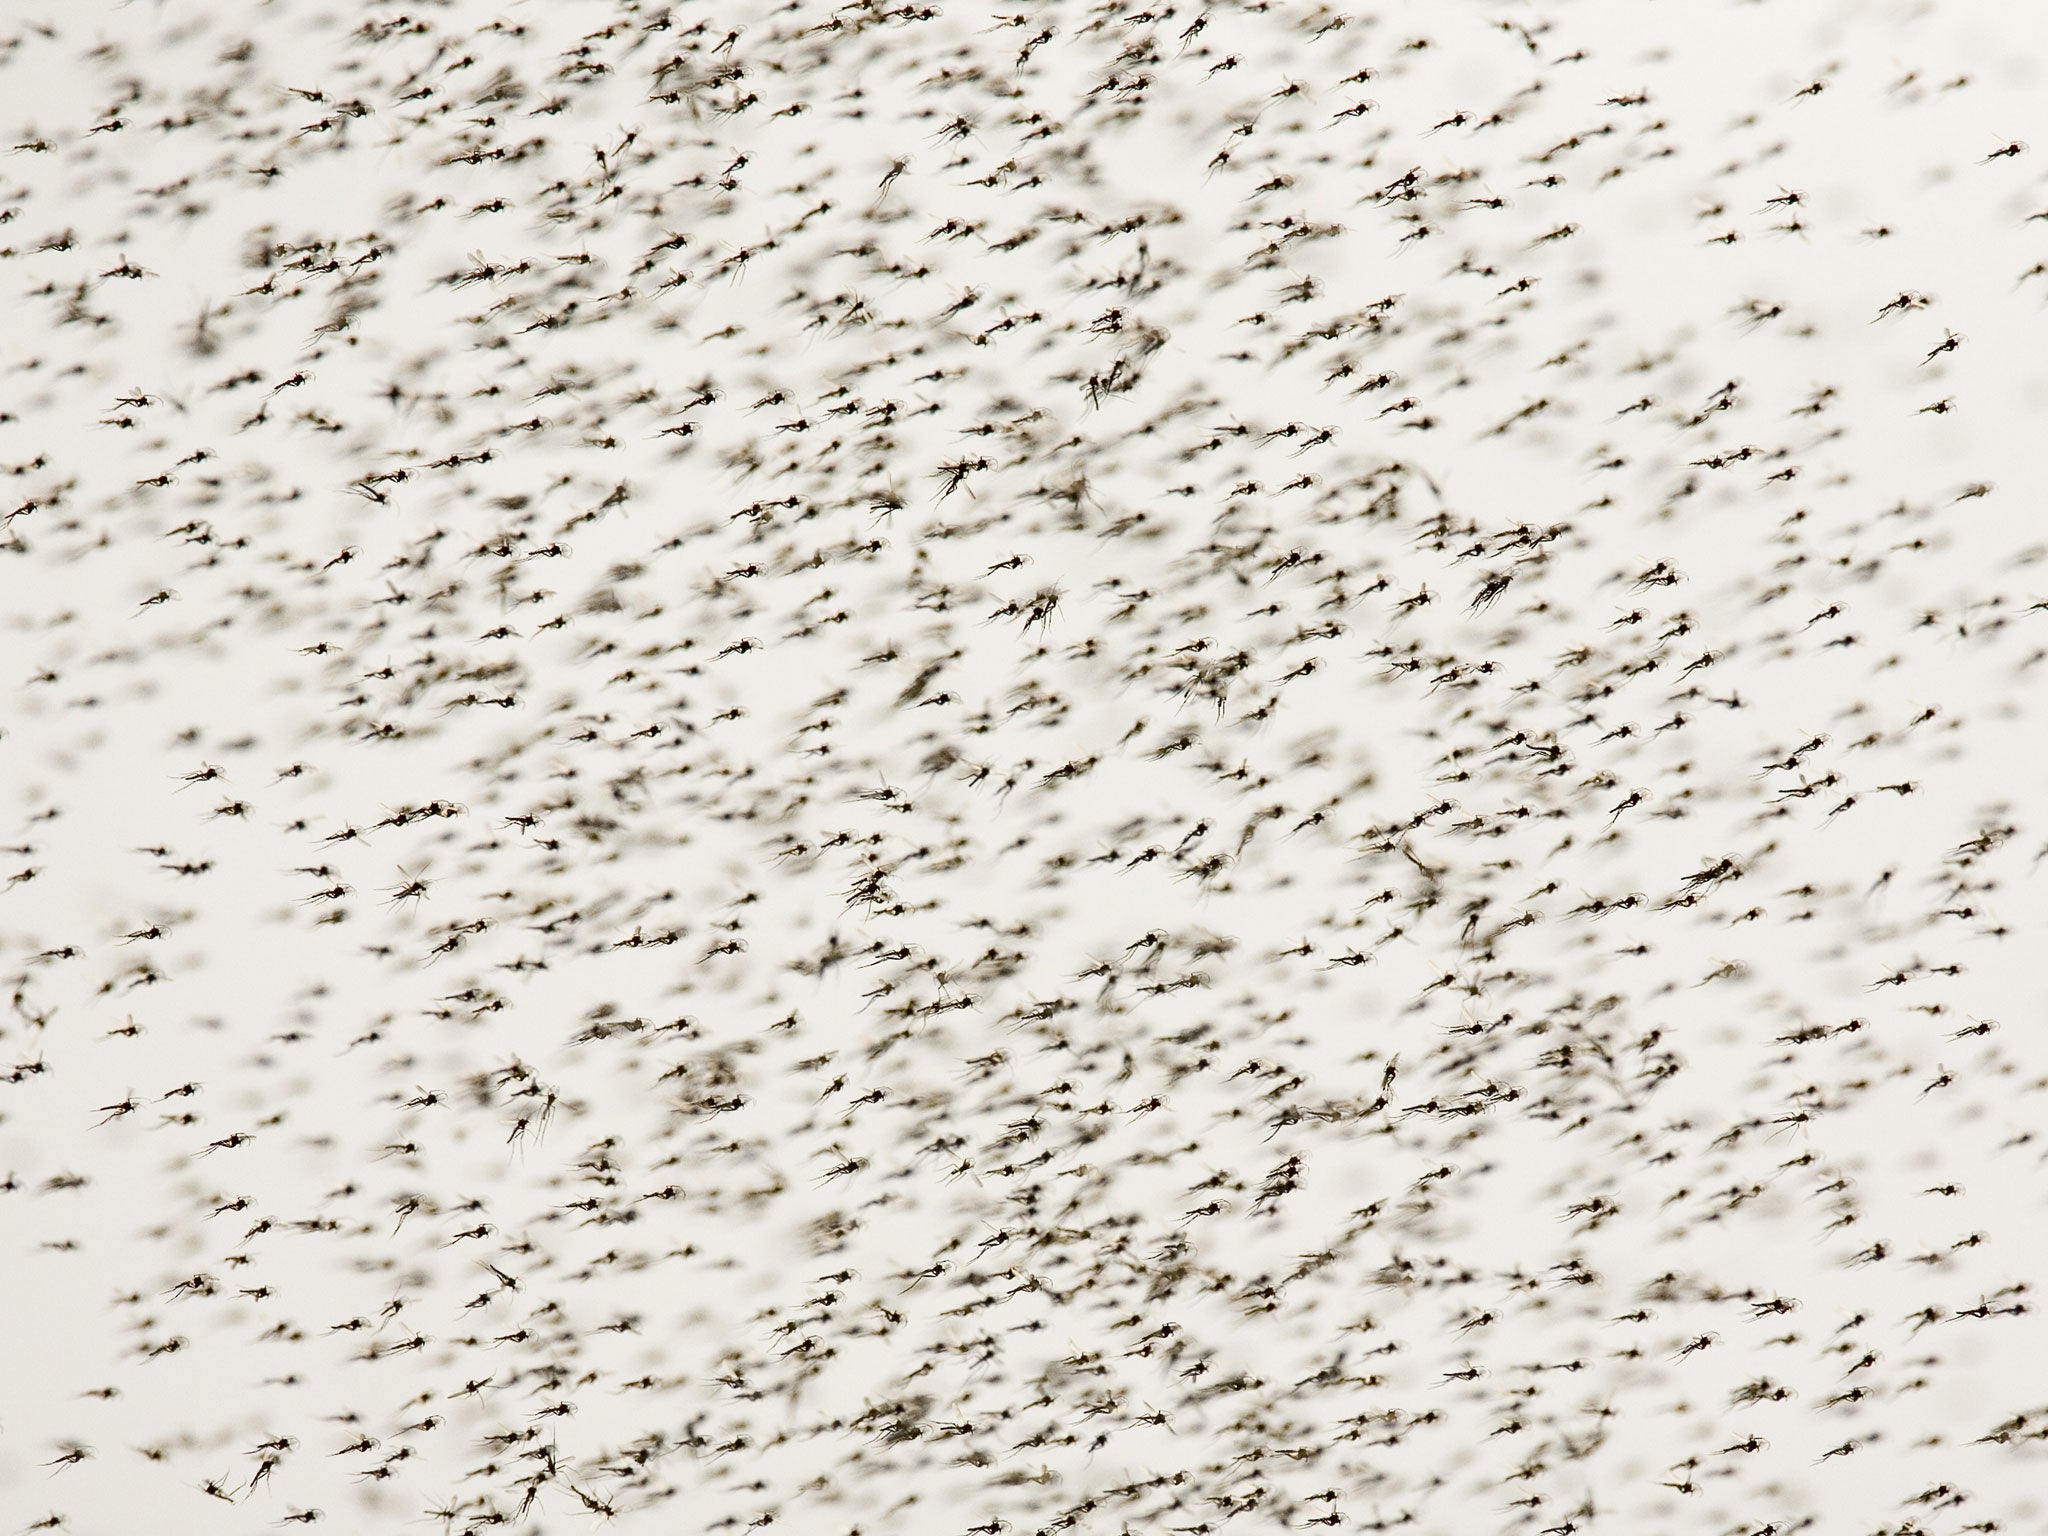 Midges swarming in the UK, by Oxford Scientific